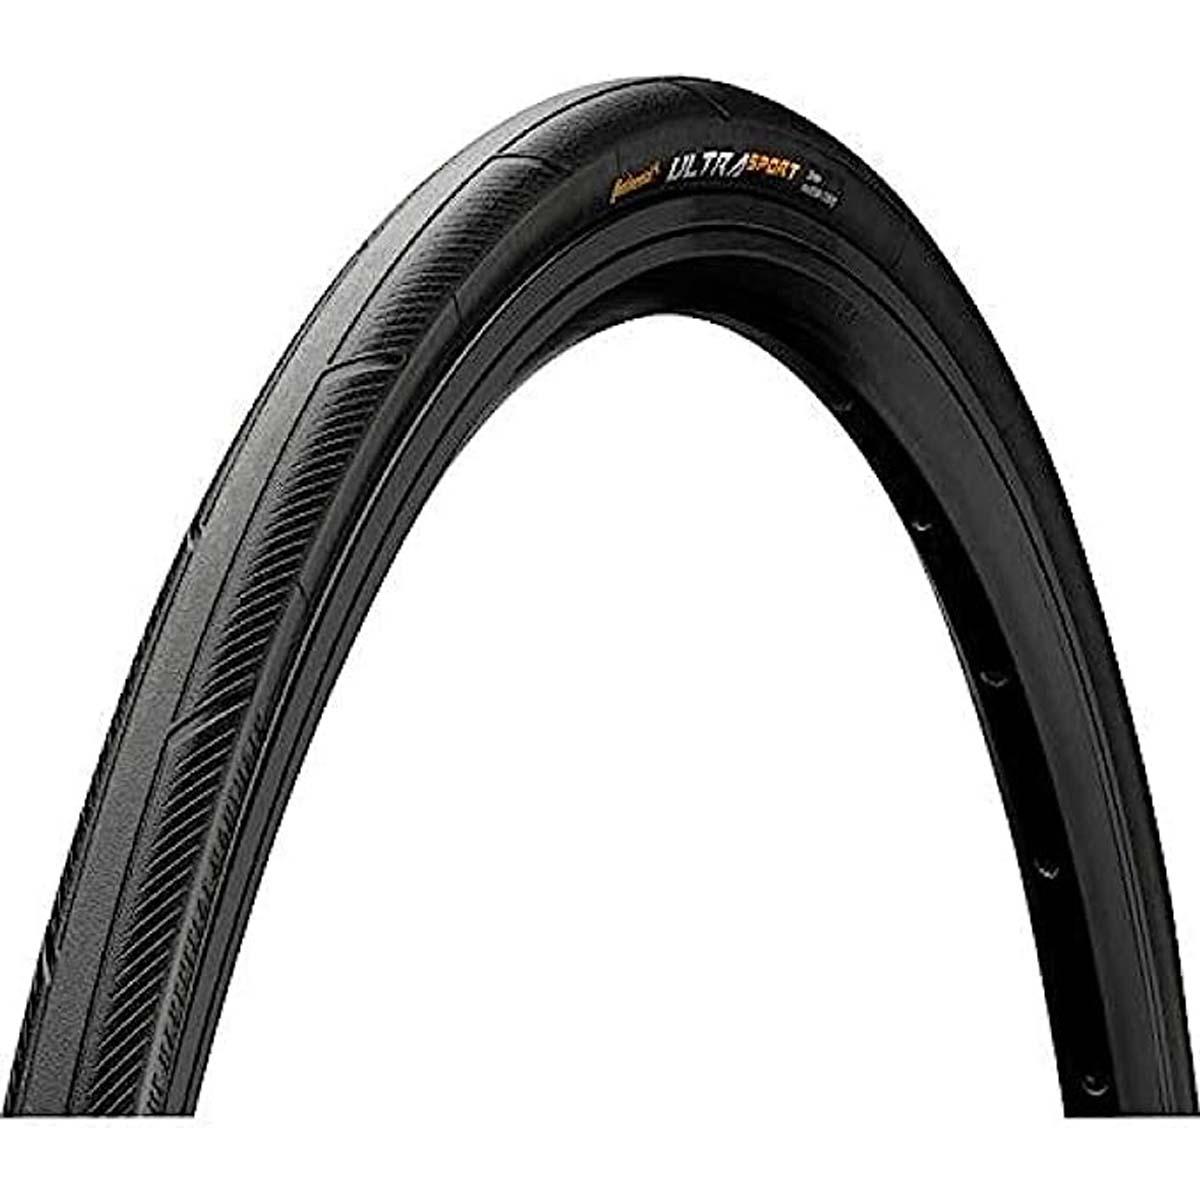 Continental Ultra Sport III Road Bike Tire - 700c - (Clincher, Folding, Black/Black) - Damaged Packaging Black/Black 700c x 28mm